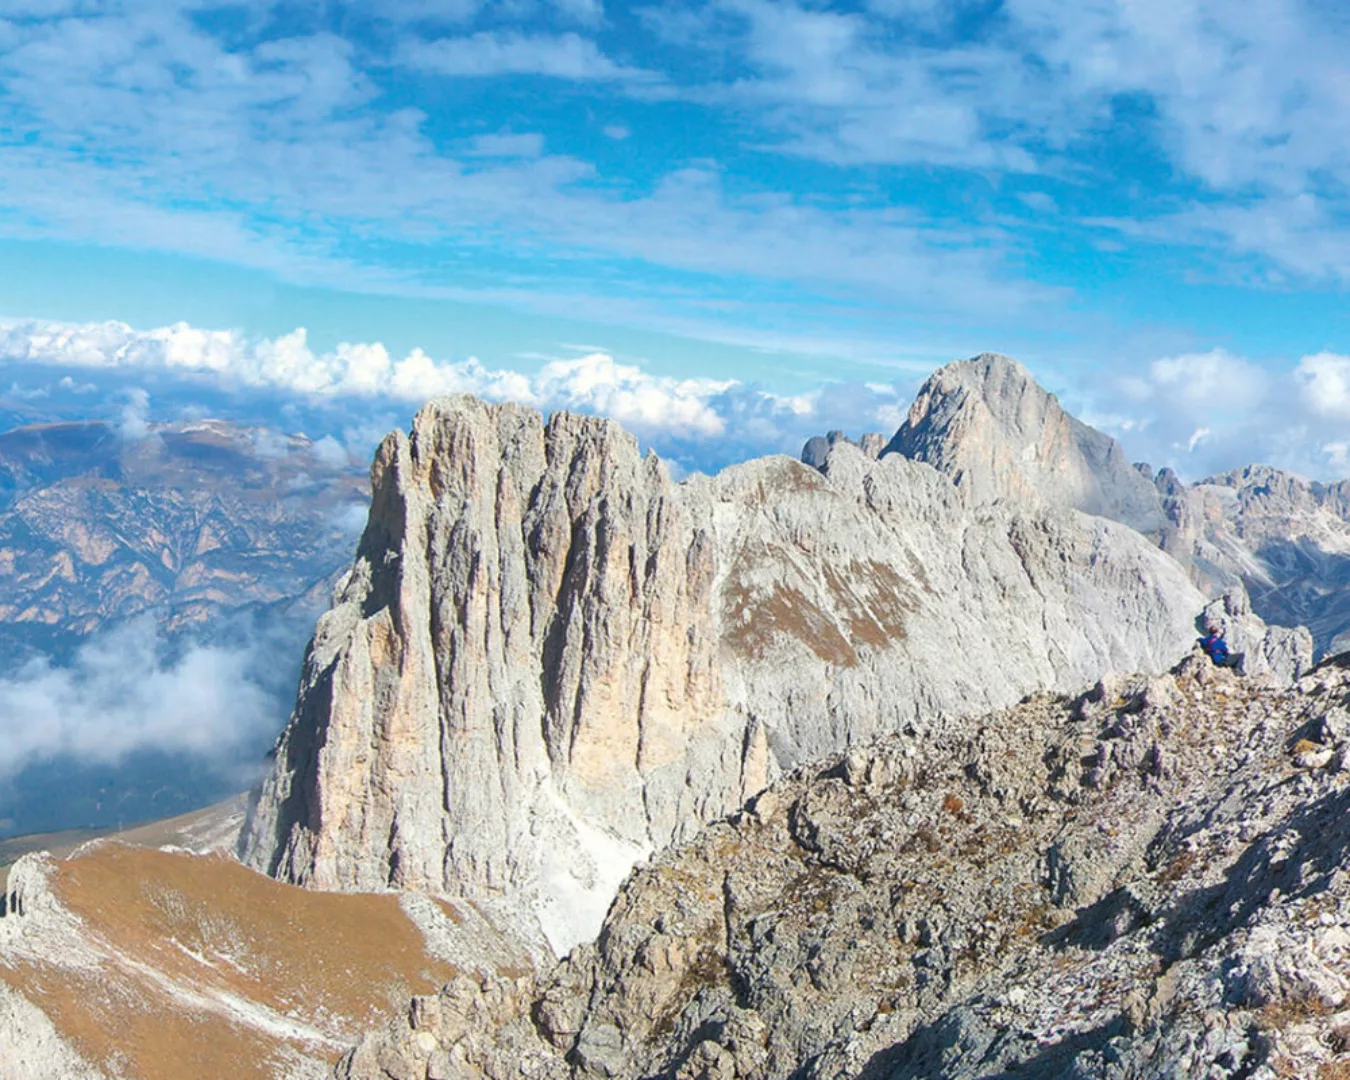 Fototapete "Berggipfel" 4,00x2,50 m / Glattvlies Perlmutt günstig online kaufen